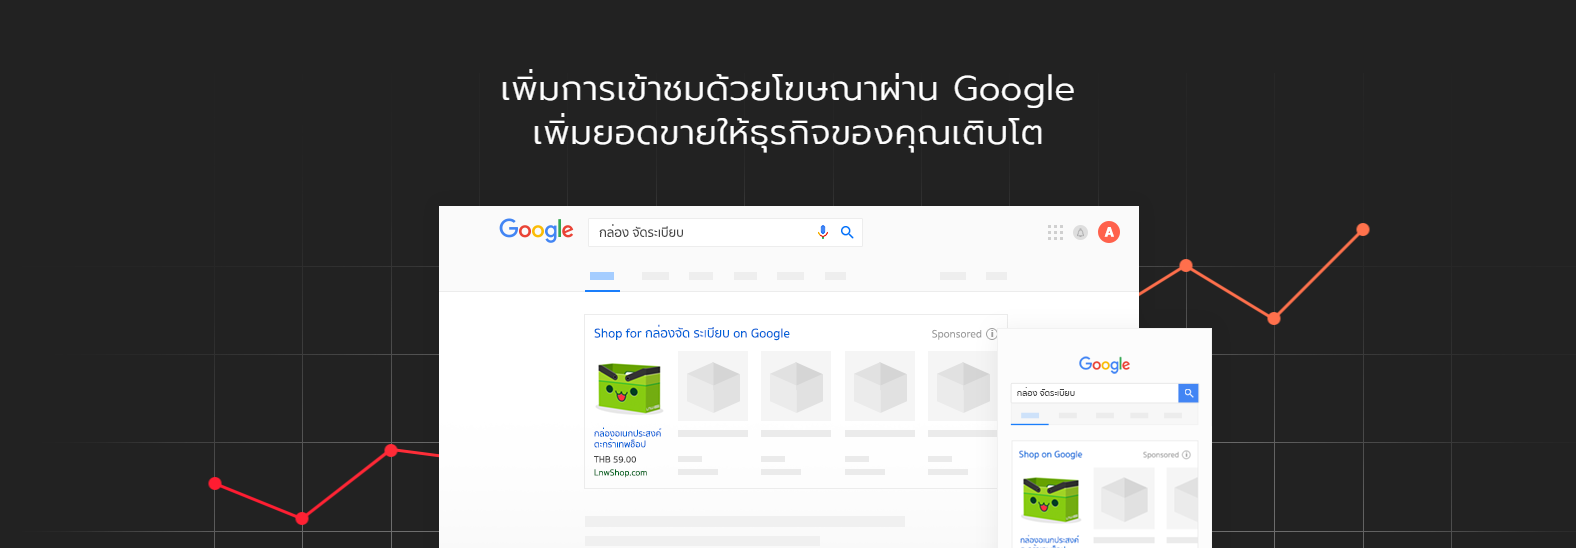 Google Shopping Ads - Google Marketing